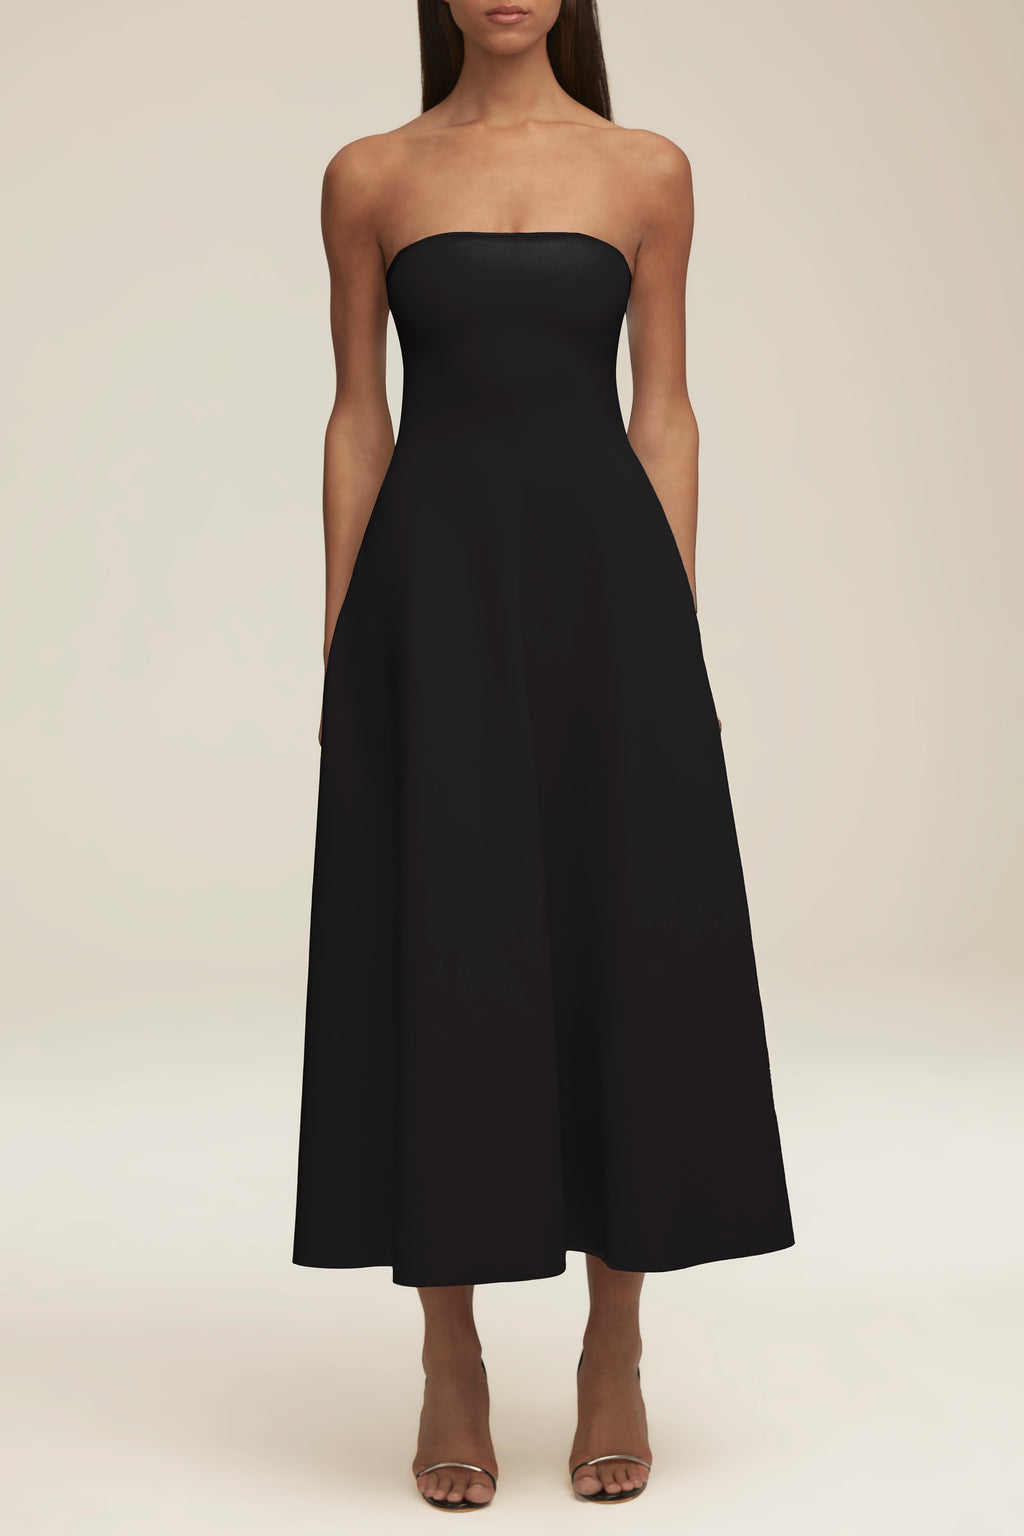 BRANDON MAXWELL, Black Women's Long Dress